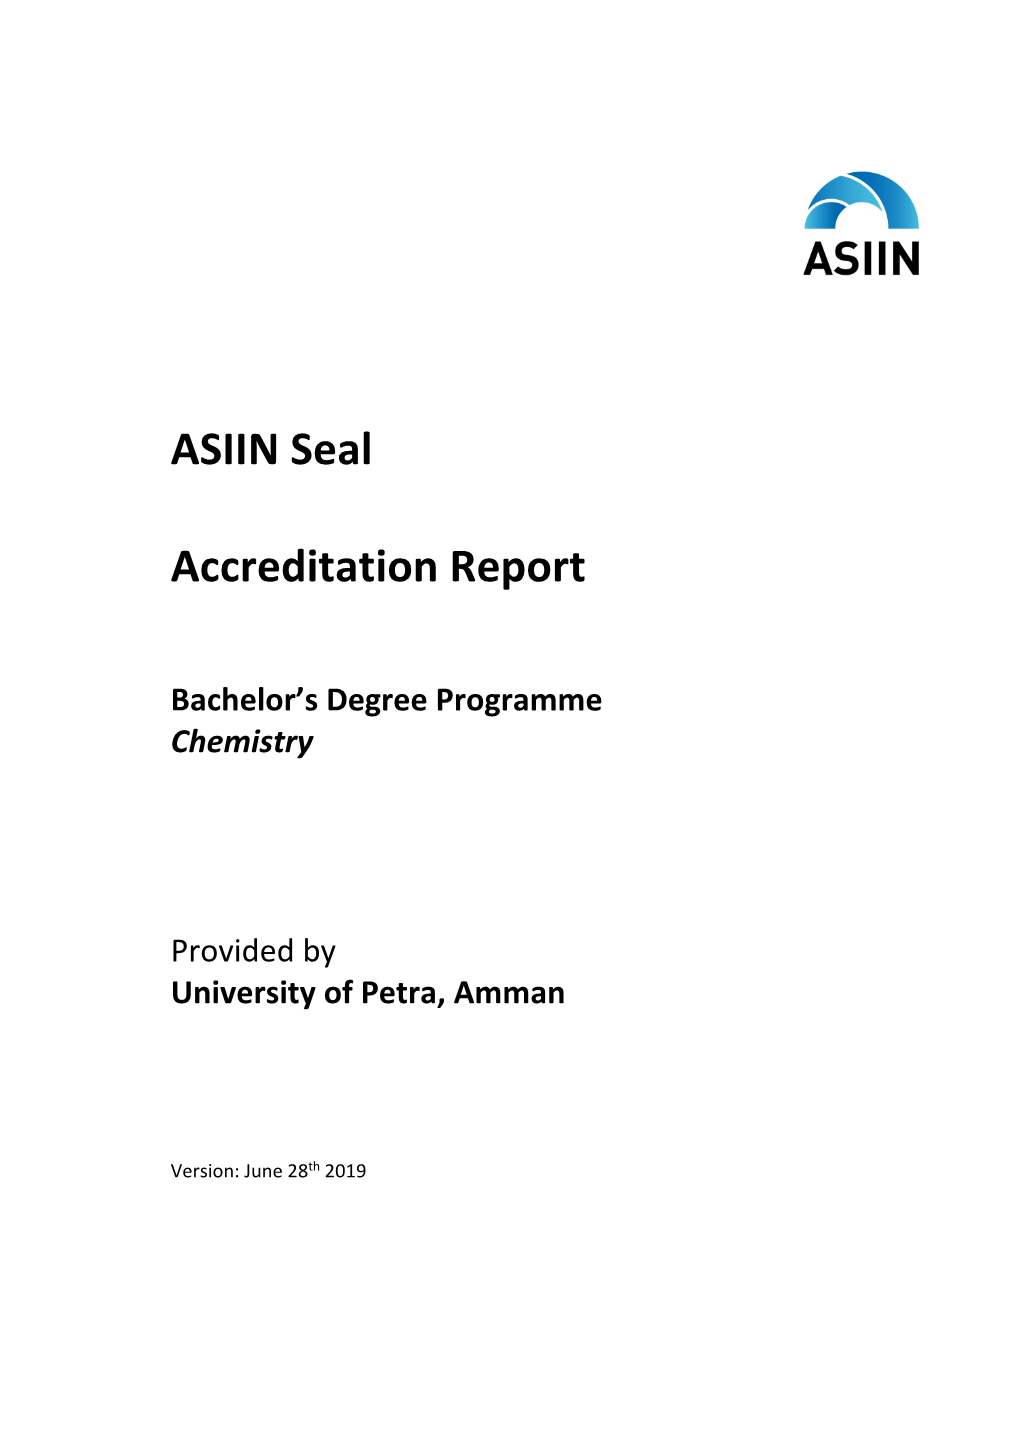 ASIIN Seal Accreditation Report